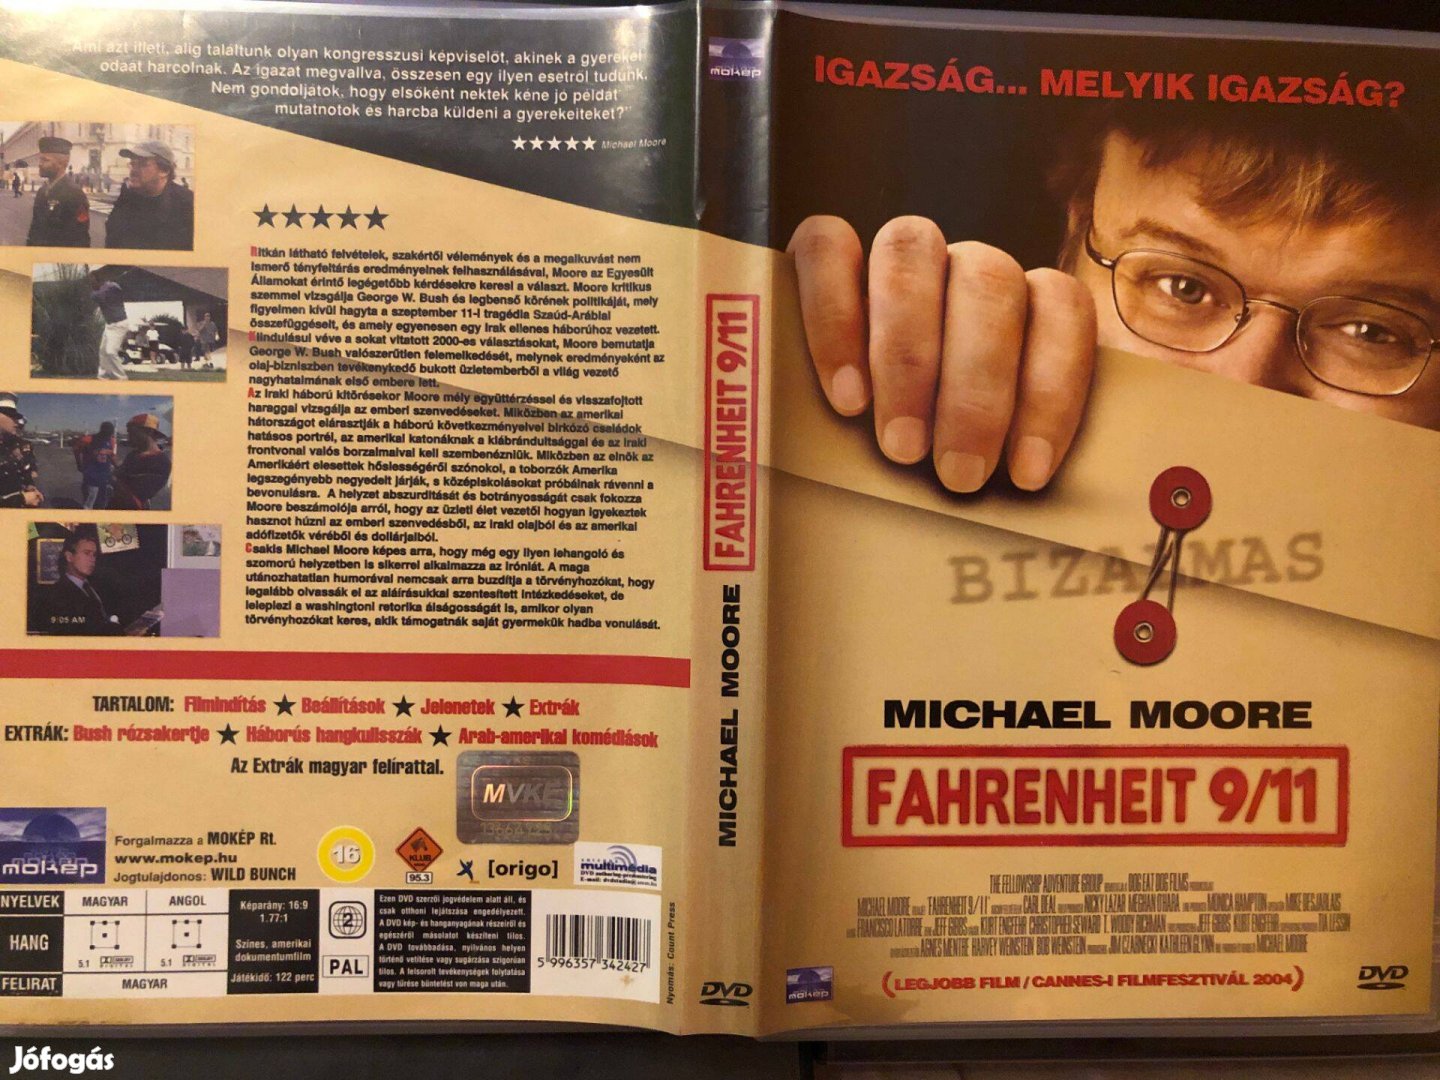 Fahrenheit 9/11 (karcmentes, Michael Moore) DVD